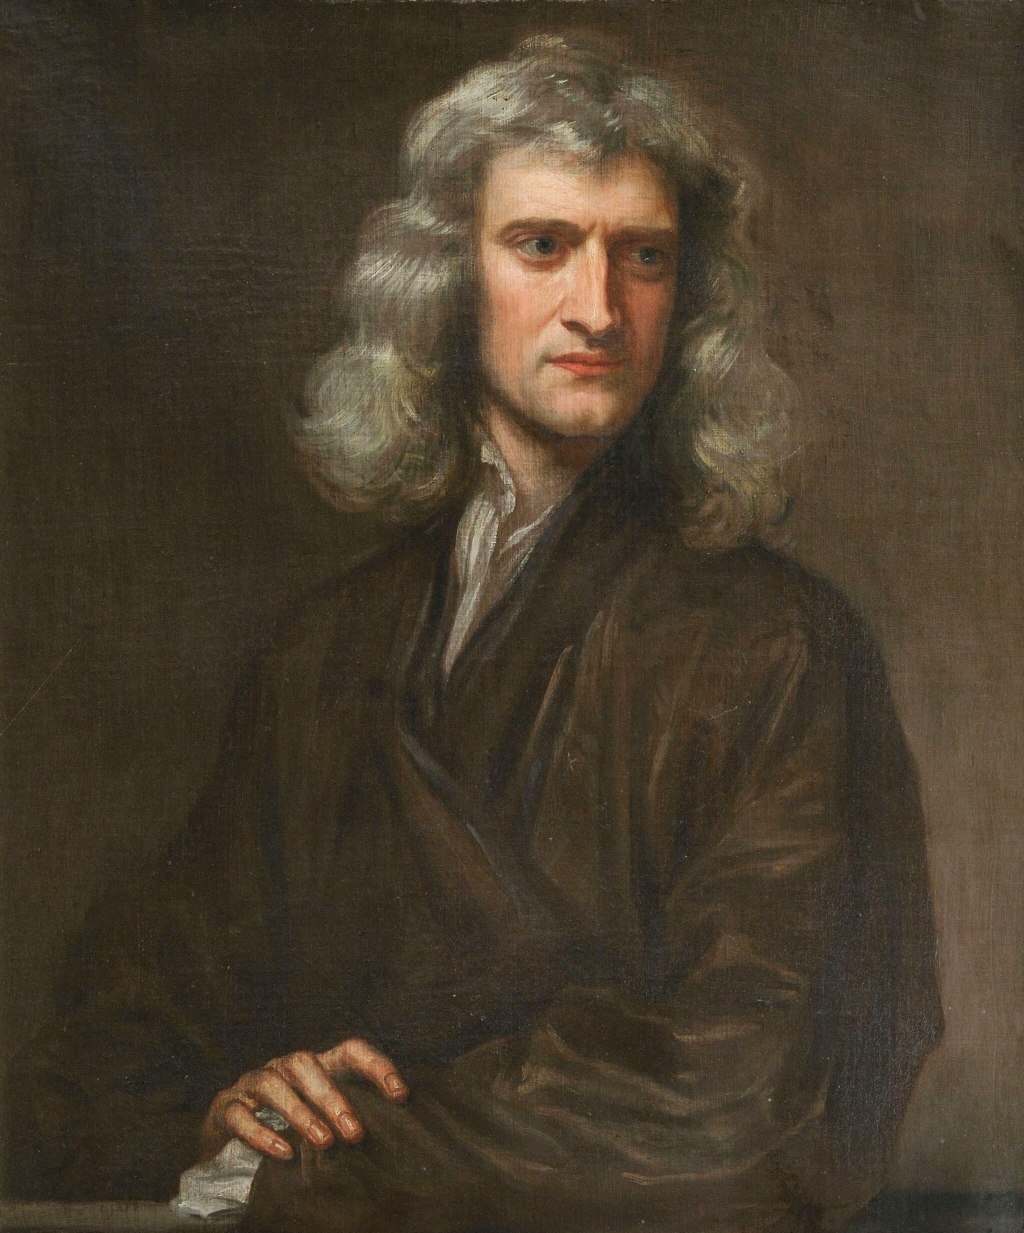 Porträt des Isaac Newton by Godfrey Kneller